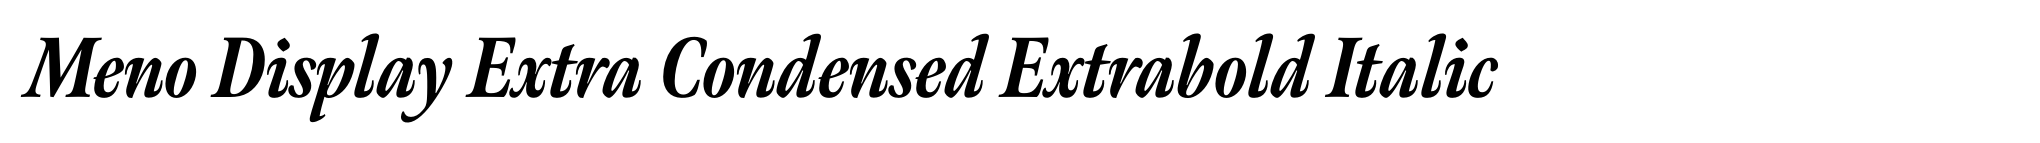 Meno Display Extra Condensed Extrabold Italic image